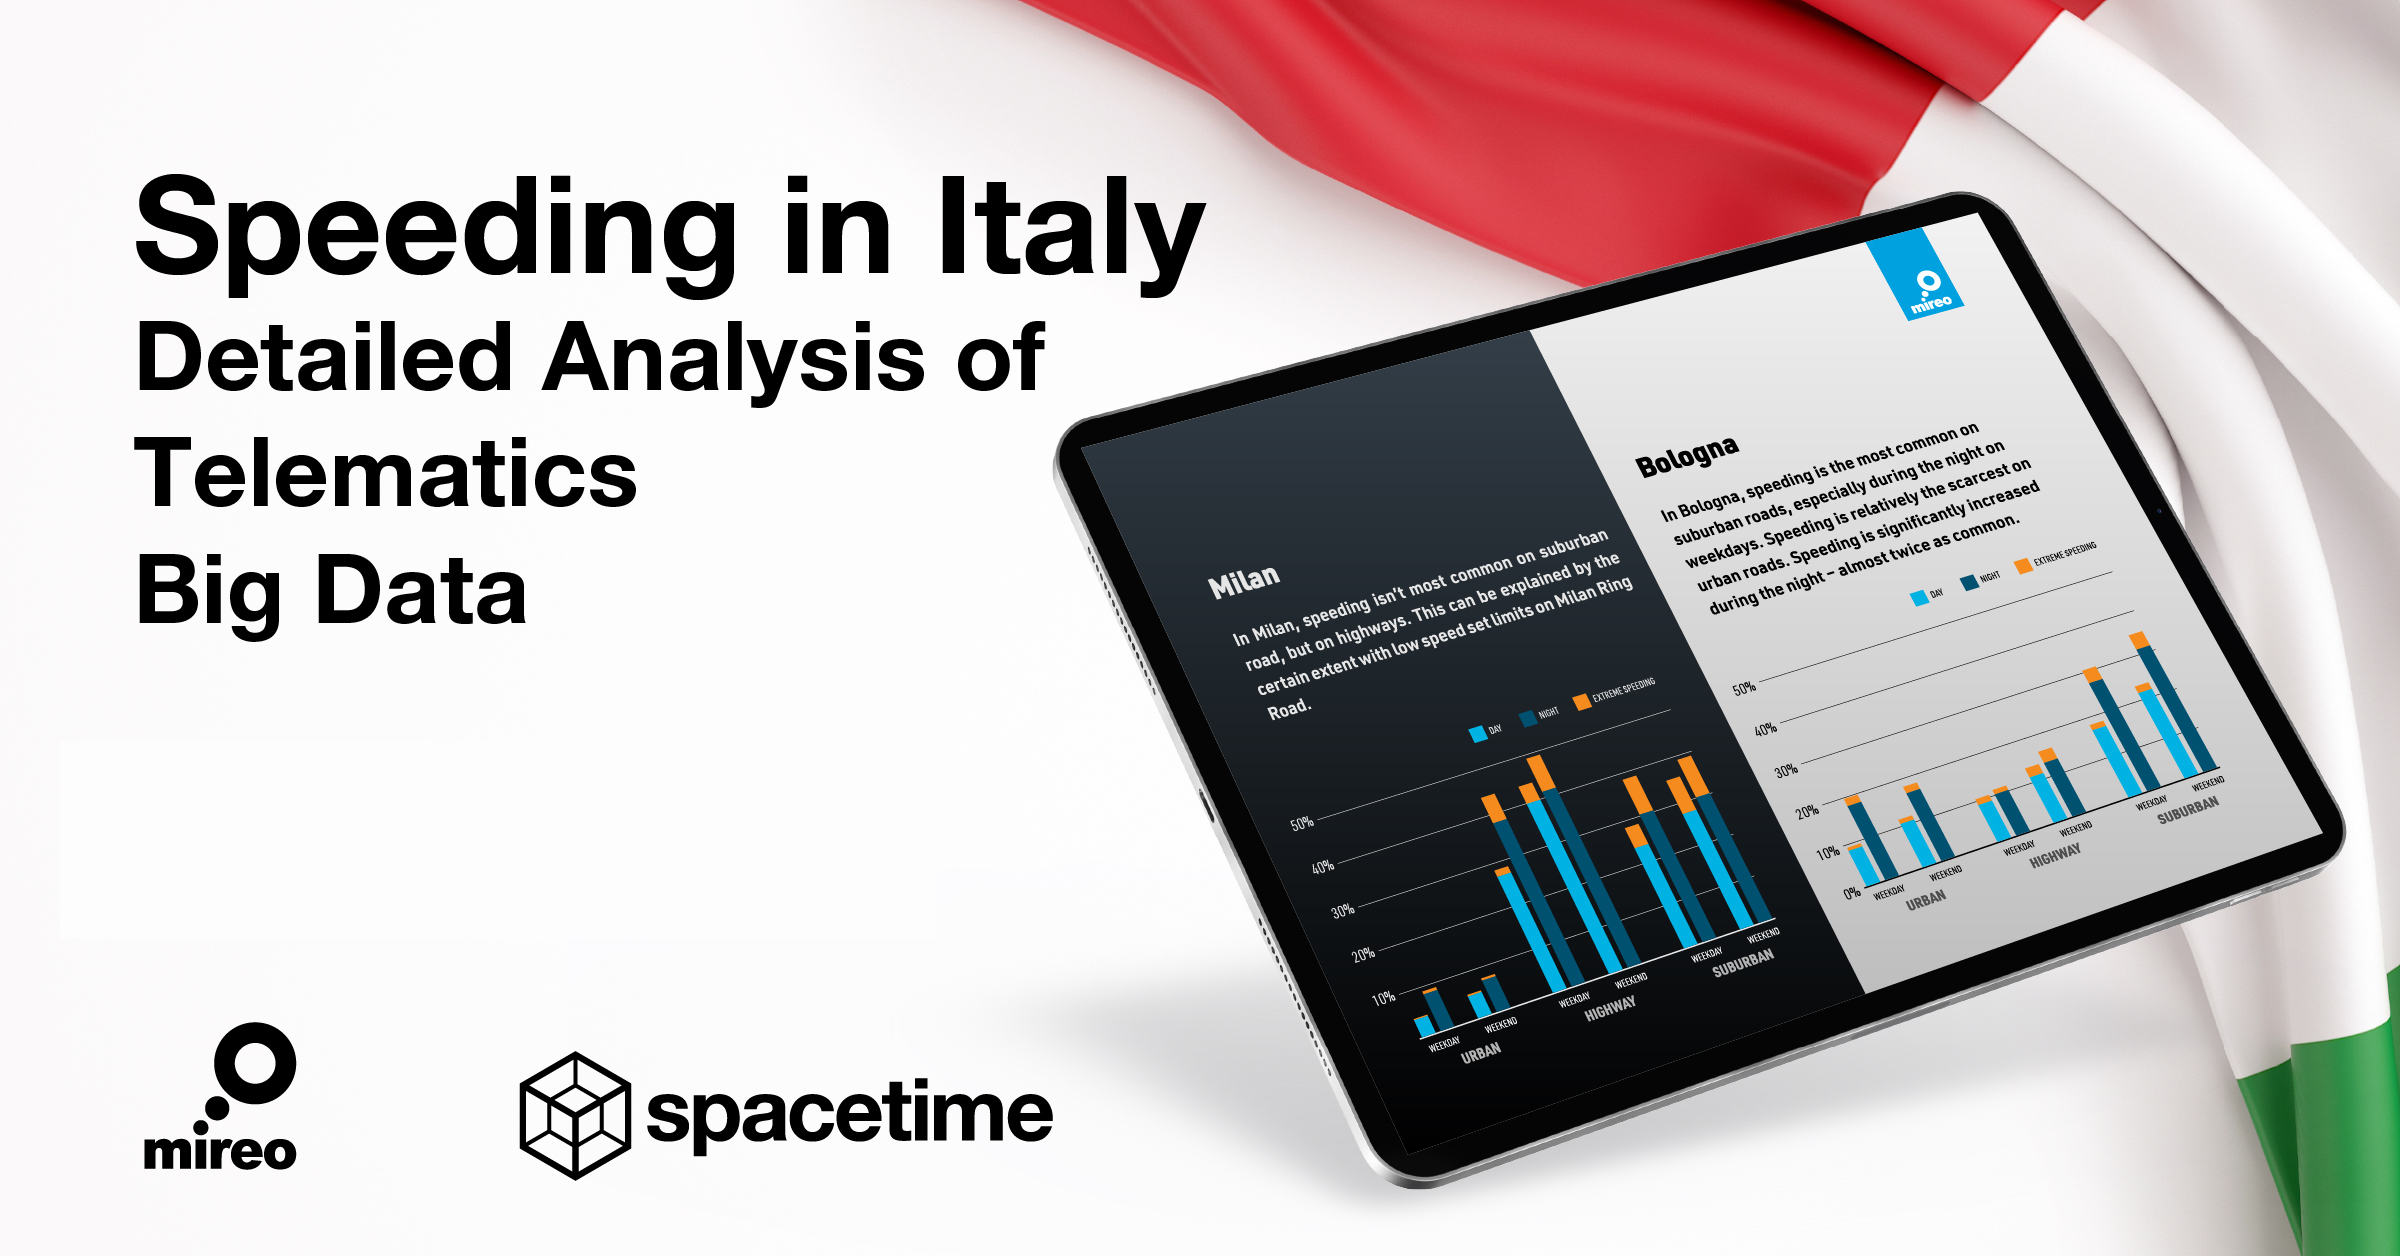 Speeding patterns in Italy